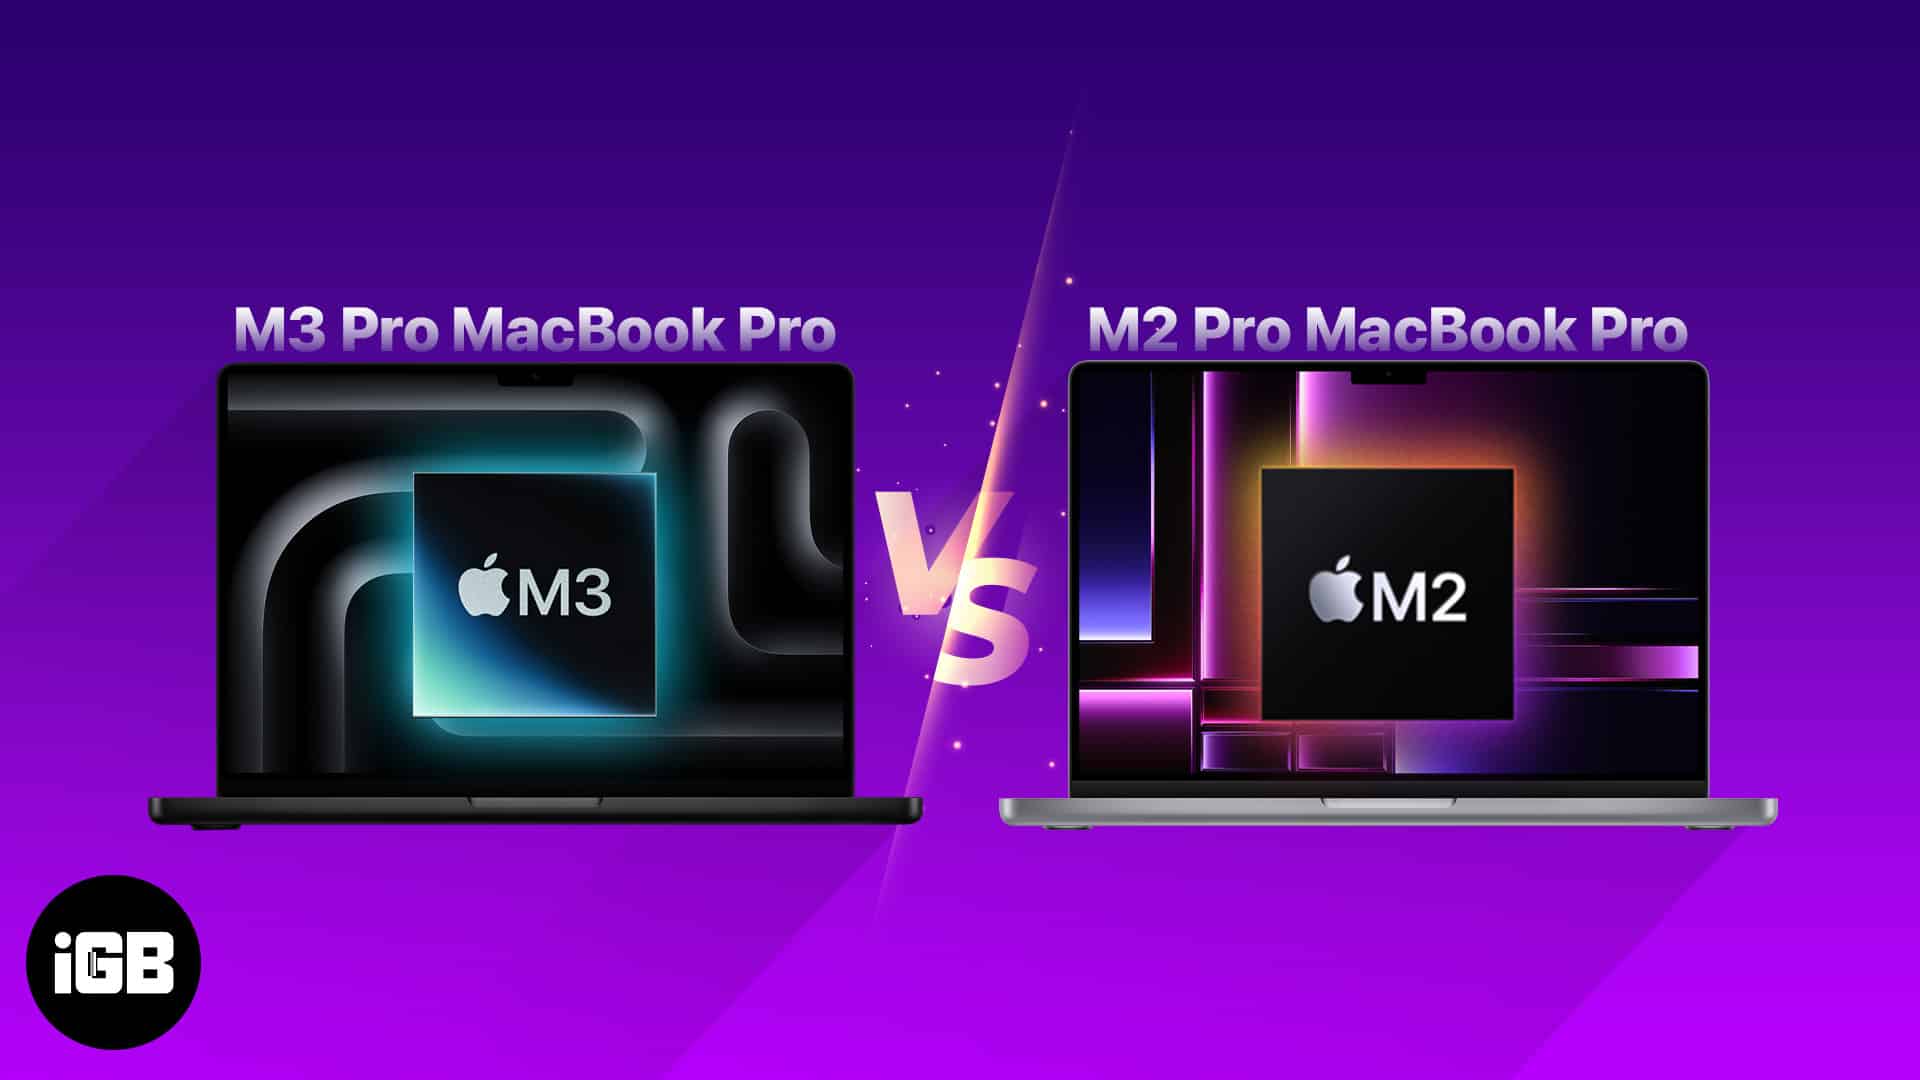 M3 pro macbook pro vs m2 pro macbook pro worth upgrading